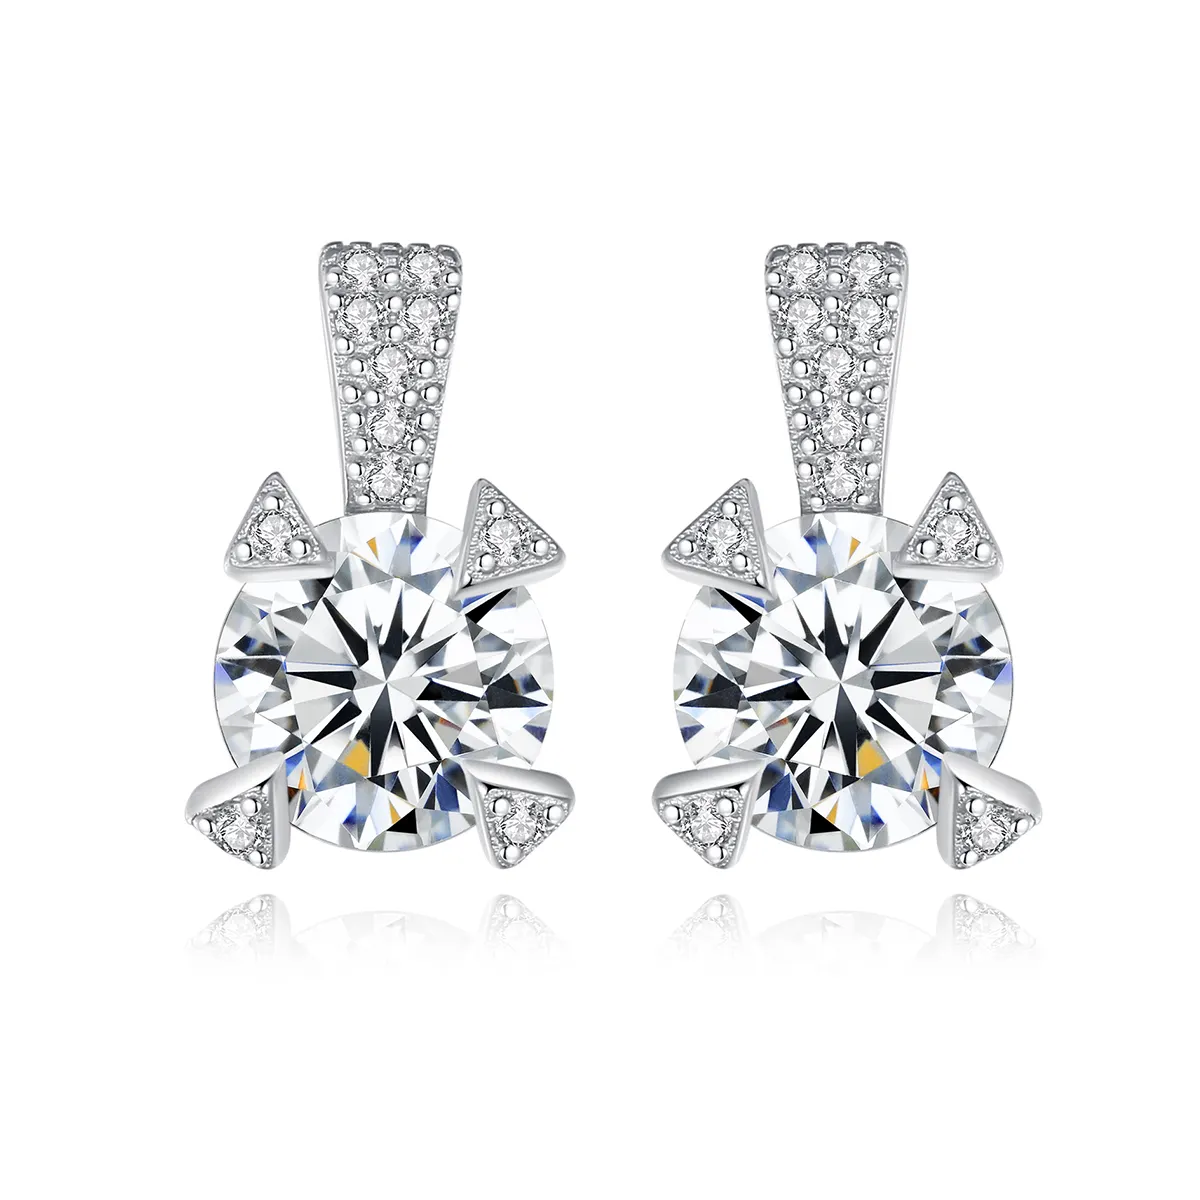 Simple 925 Sterling Silver CZ Diamond Stud Earring Round Cubic Zircon 4 Prong Set Fashion CZ Earrings Jewelry